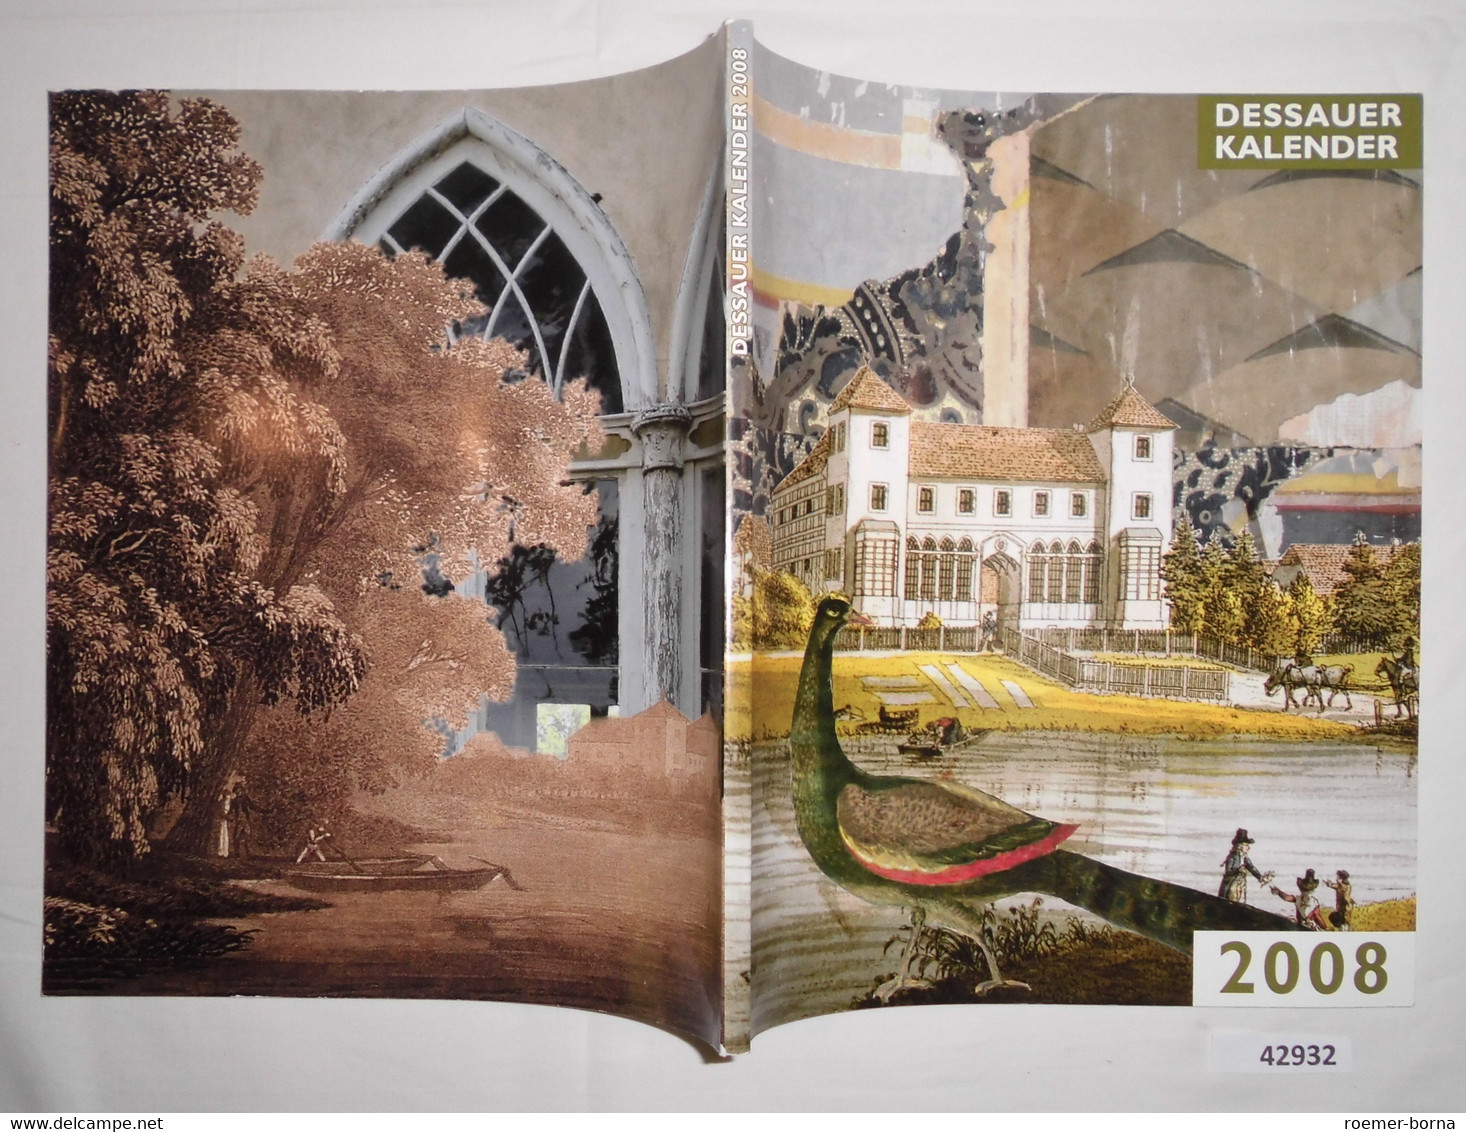 Dessauer Kalender 2008 (52. Jahrgang) - Calendari